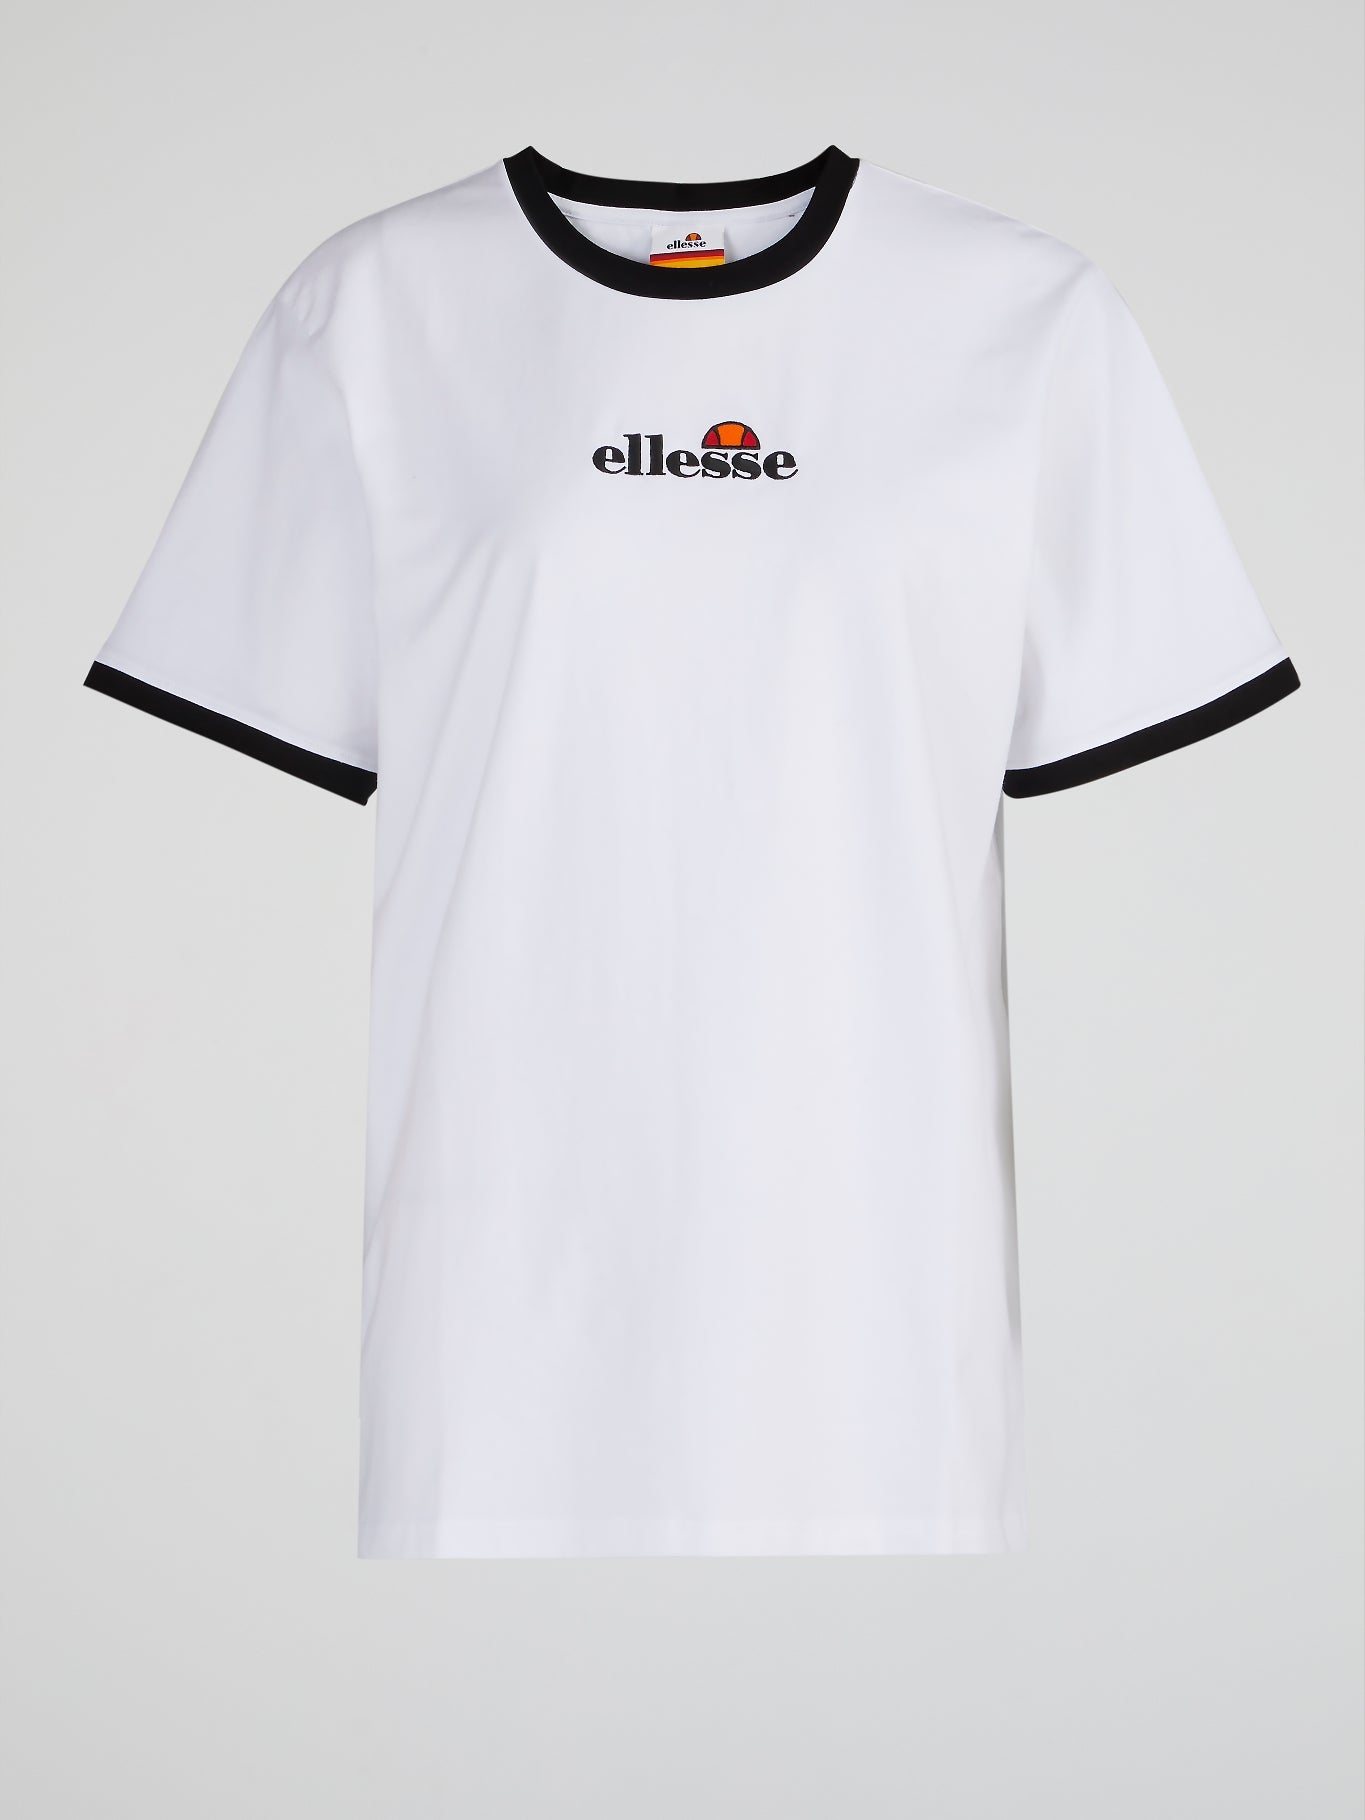 Serafina White Contrast Trim T-Shirt